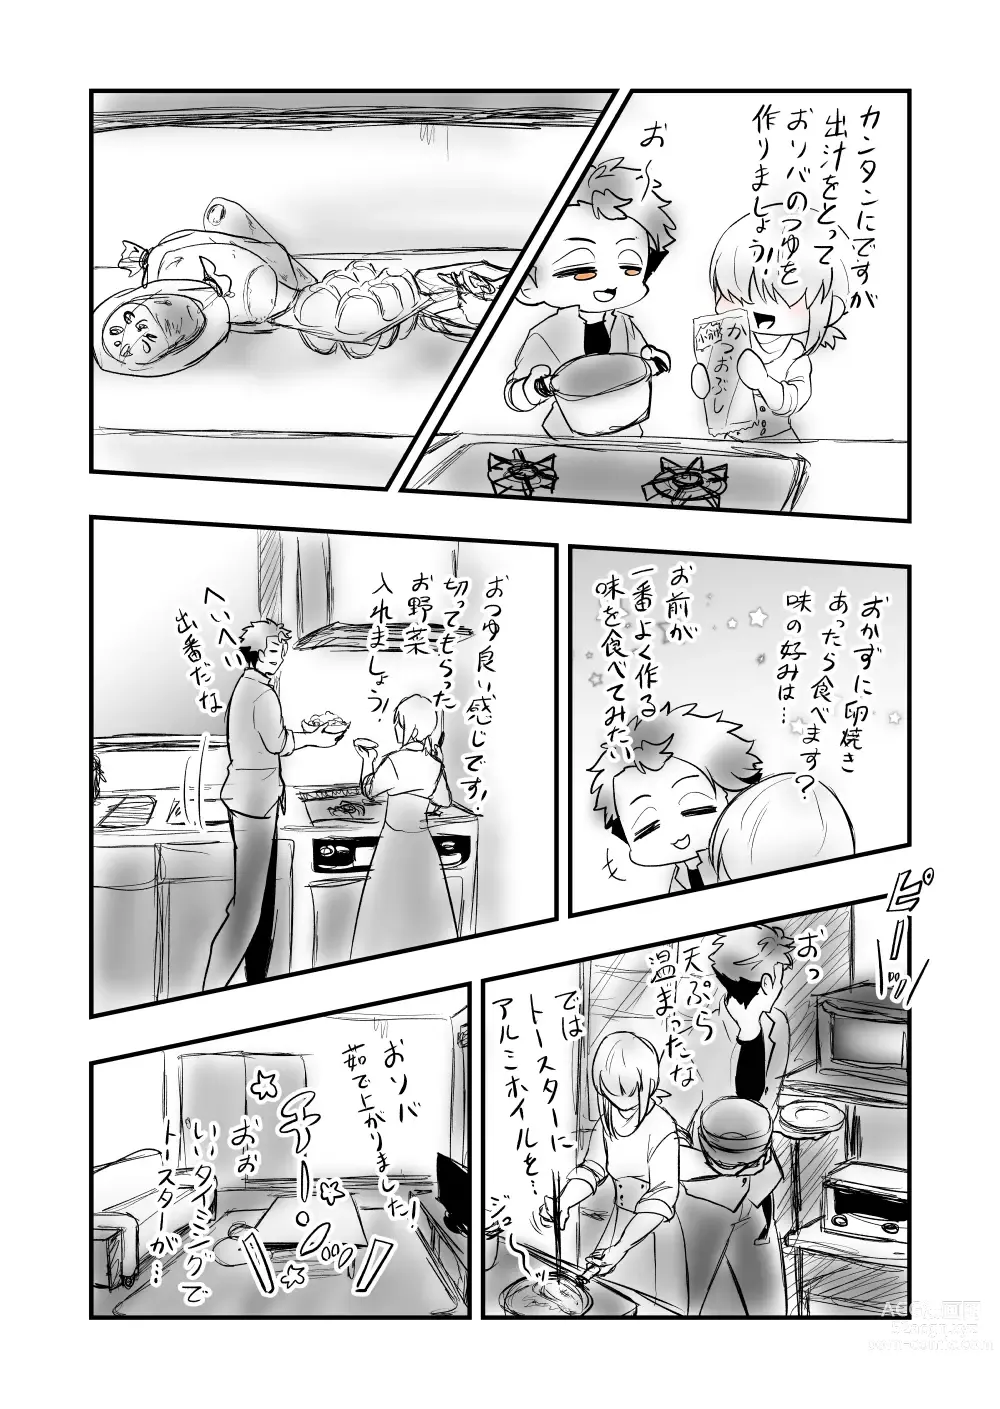 Page 10 of doujinshi 5